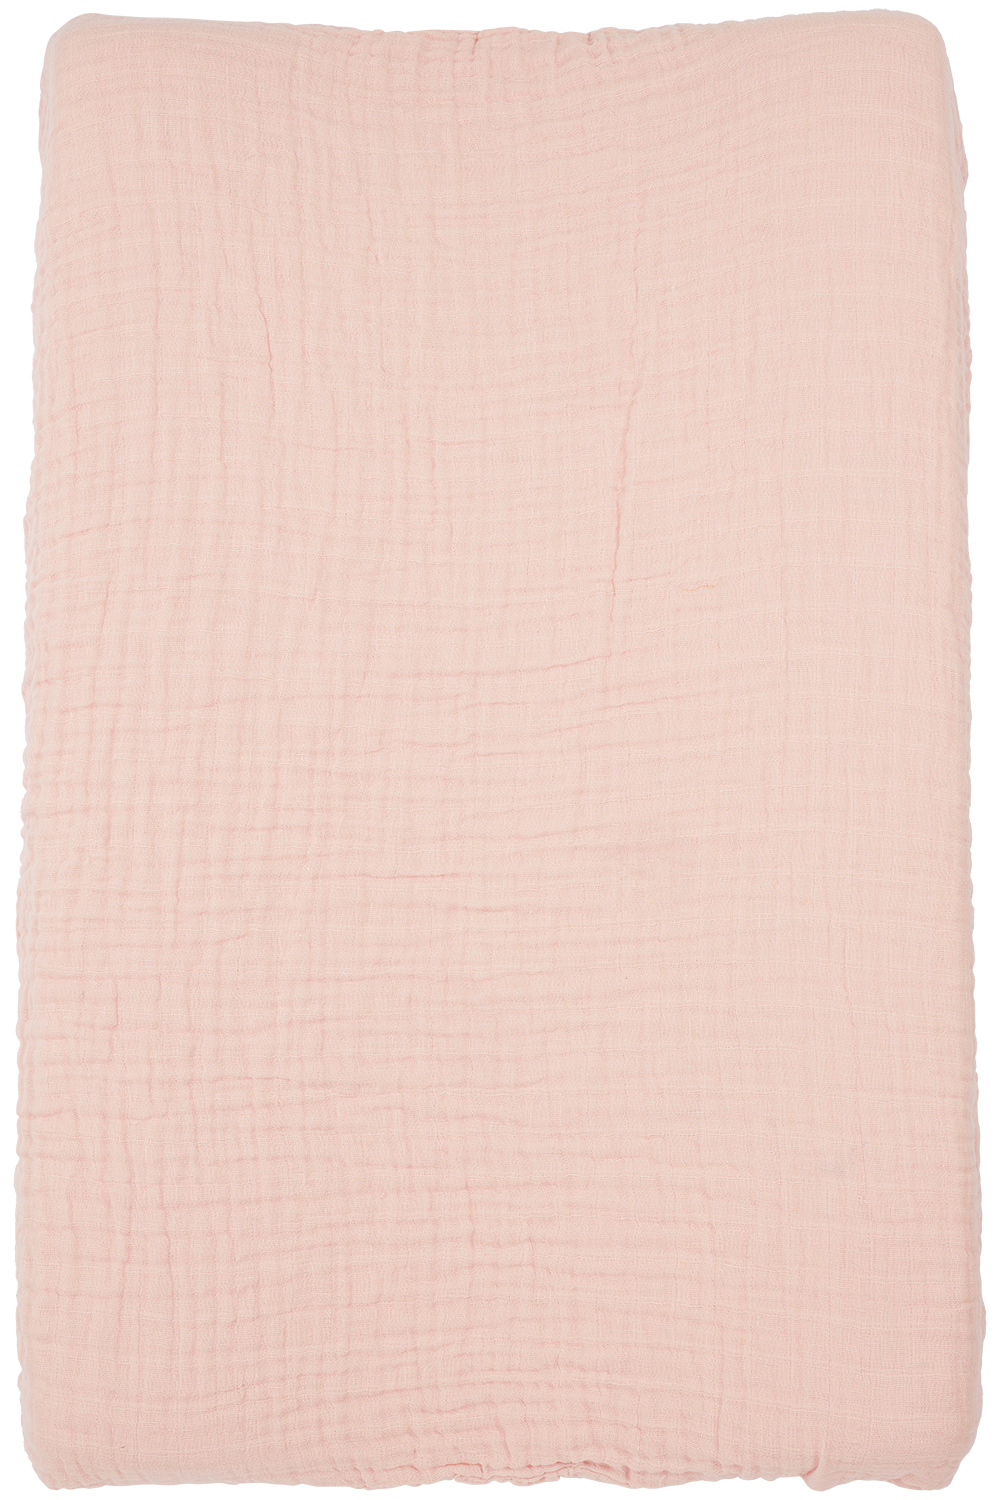 Aankleedkussenhoes hydrofiel Uni - soft pink - 50x70cm